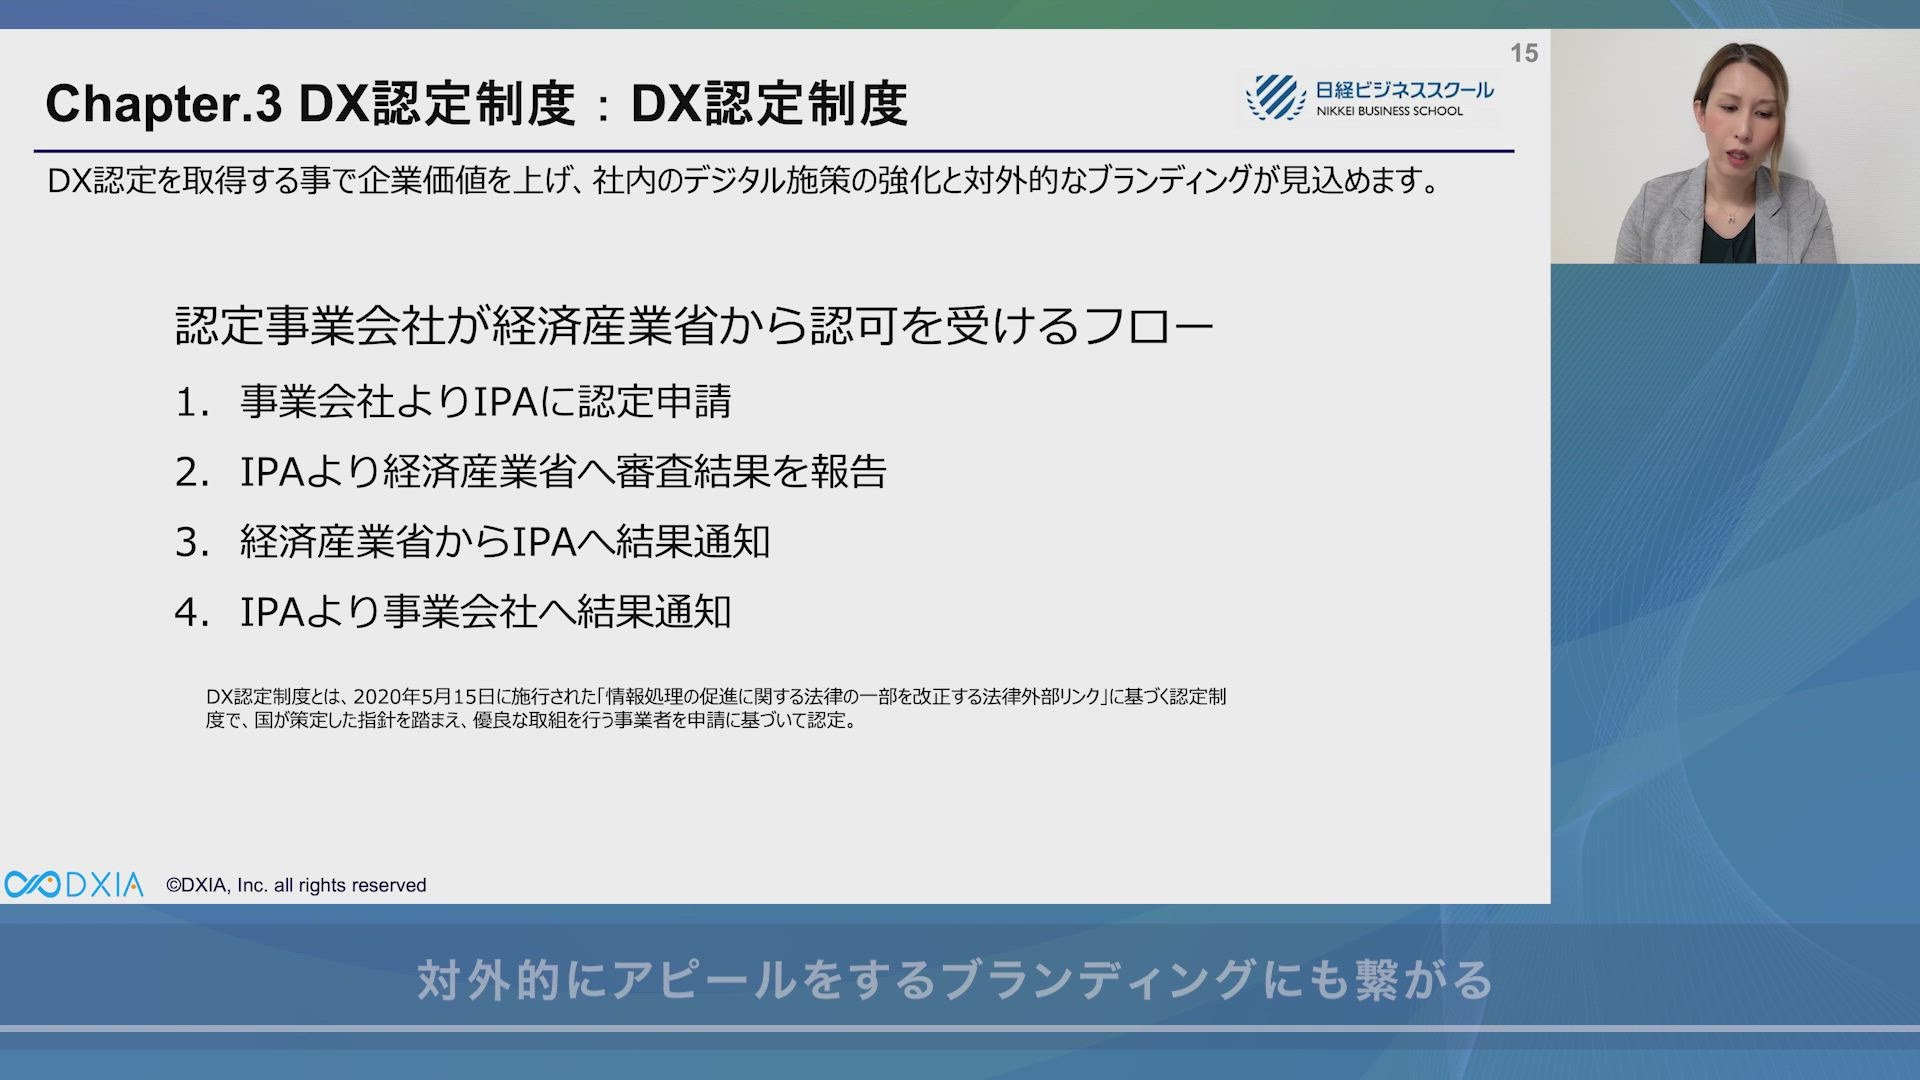 3. DX認定制度